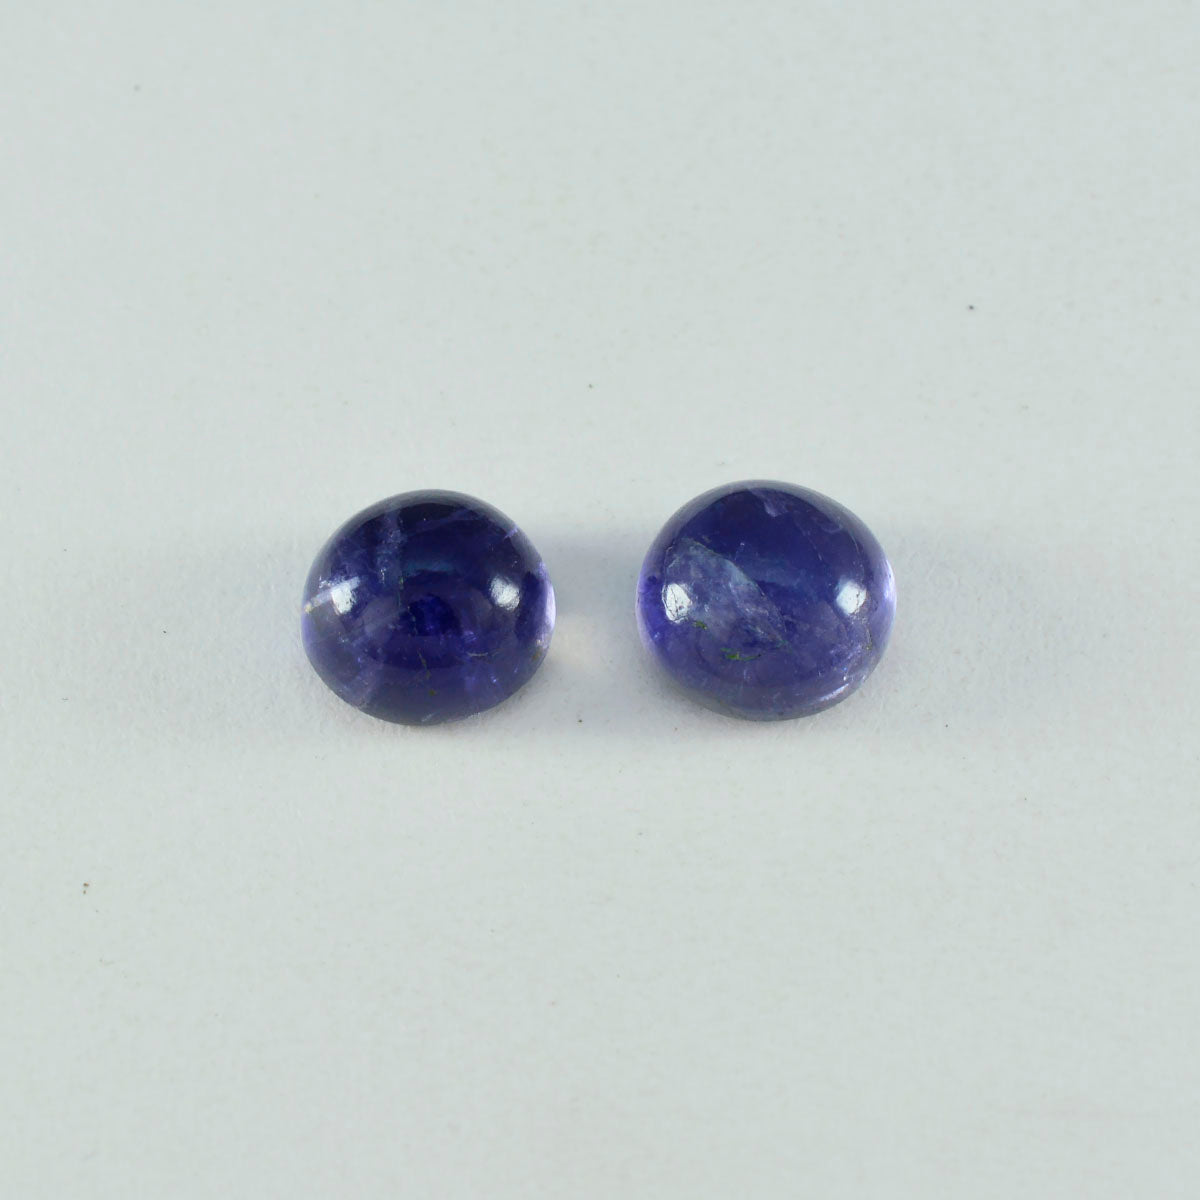 Riyogems 1PC blauwe ioliet cabochon 11x11 mm ronde vorm mooie kwaliteit edelsteen